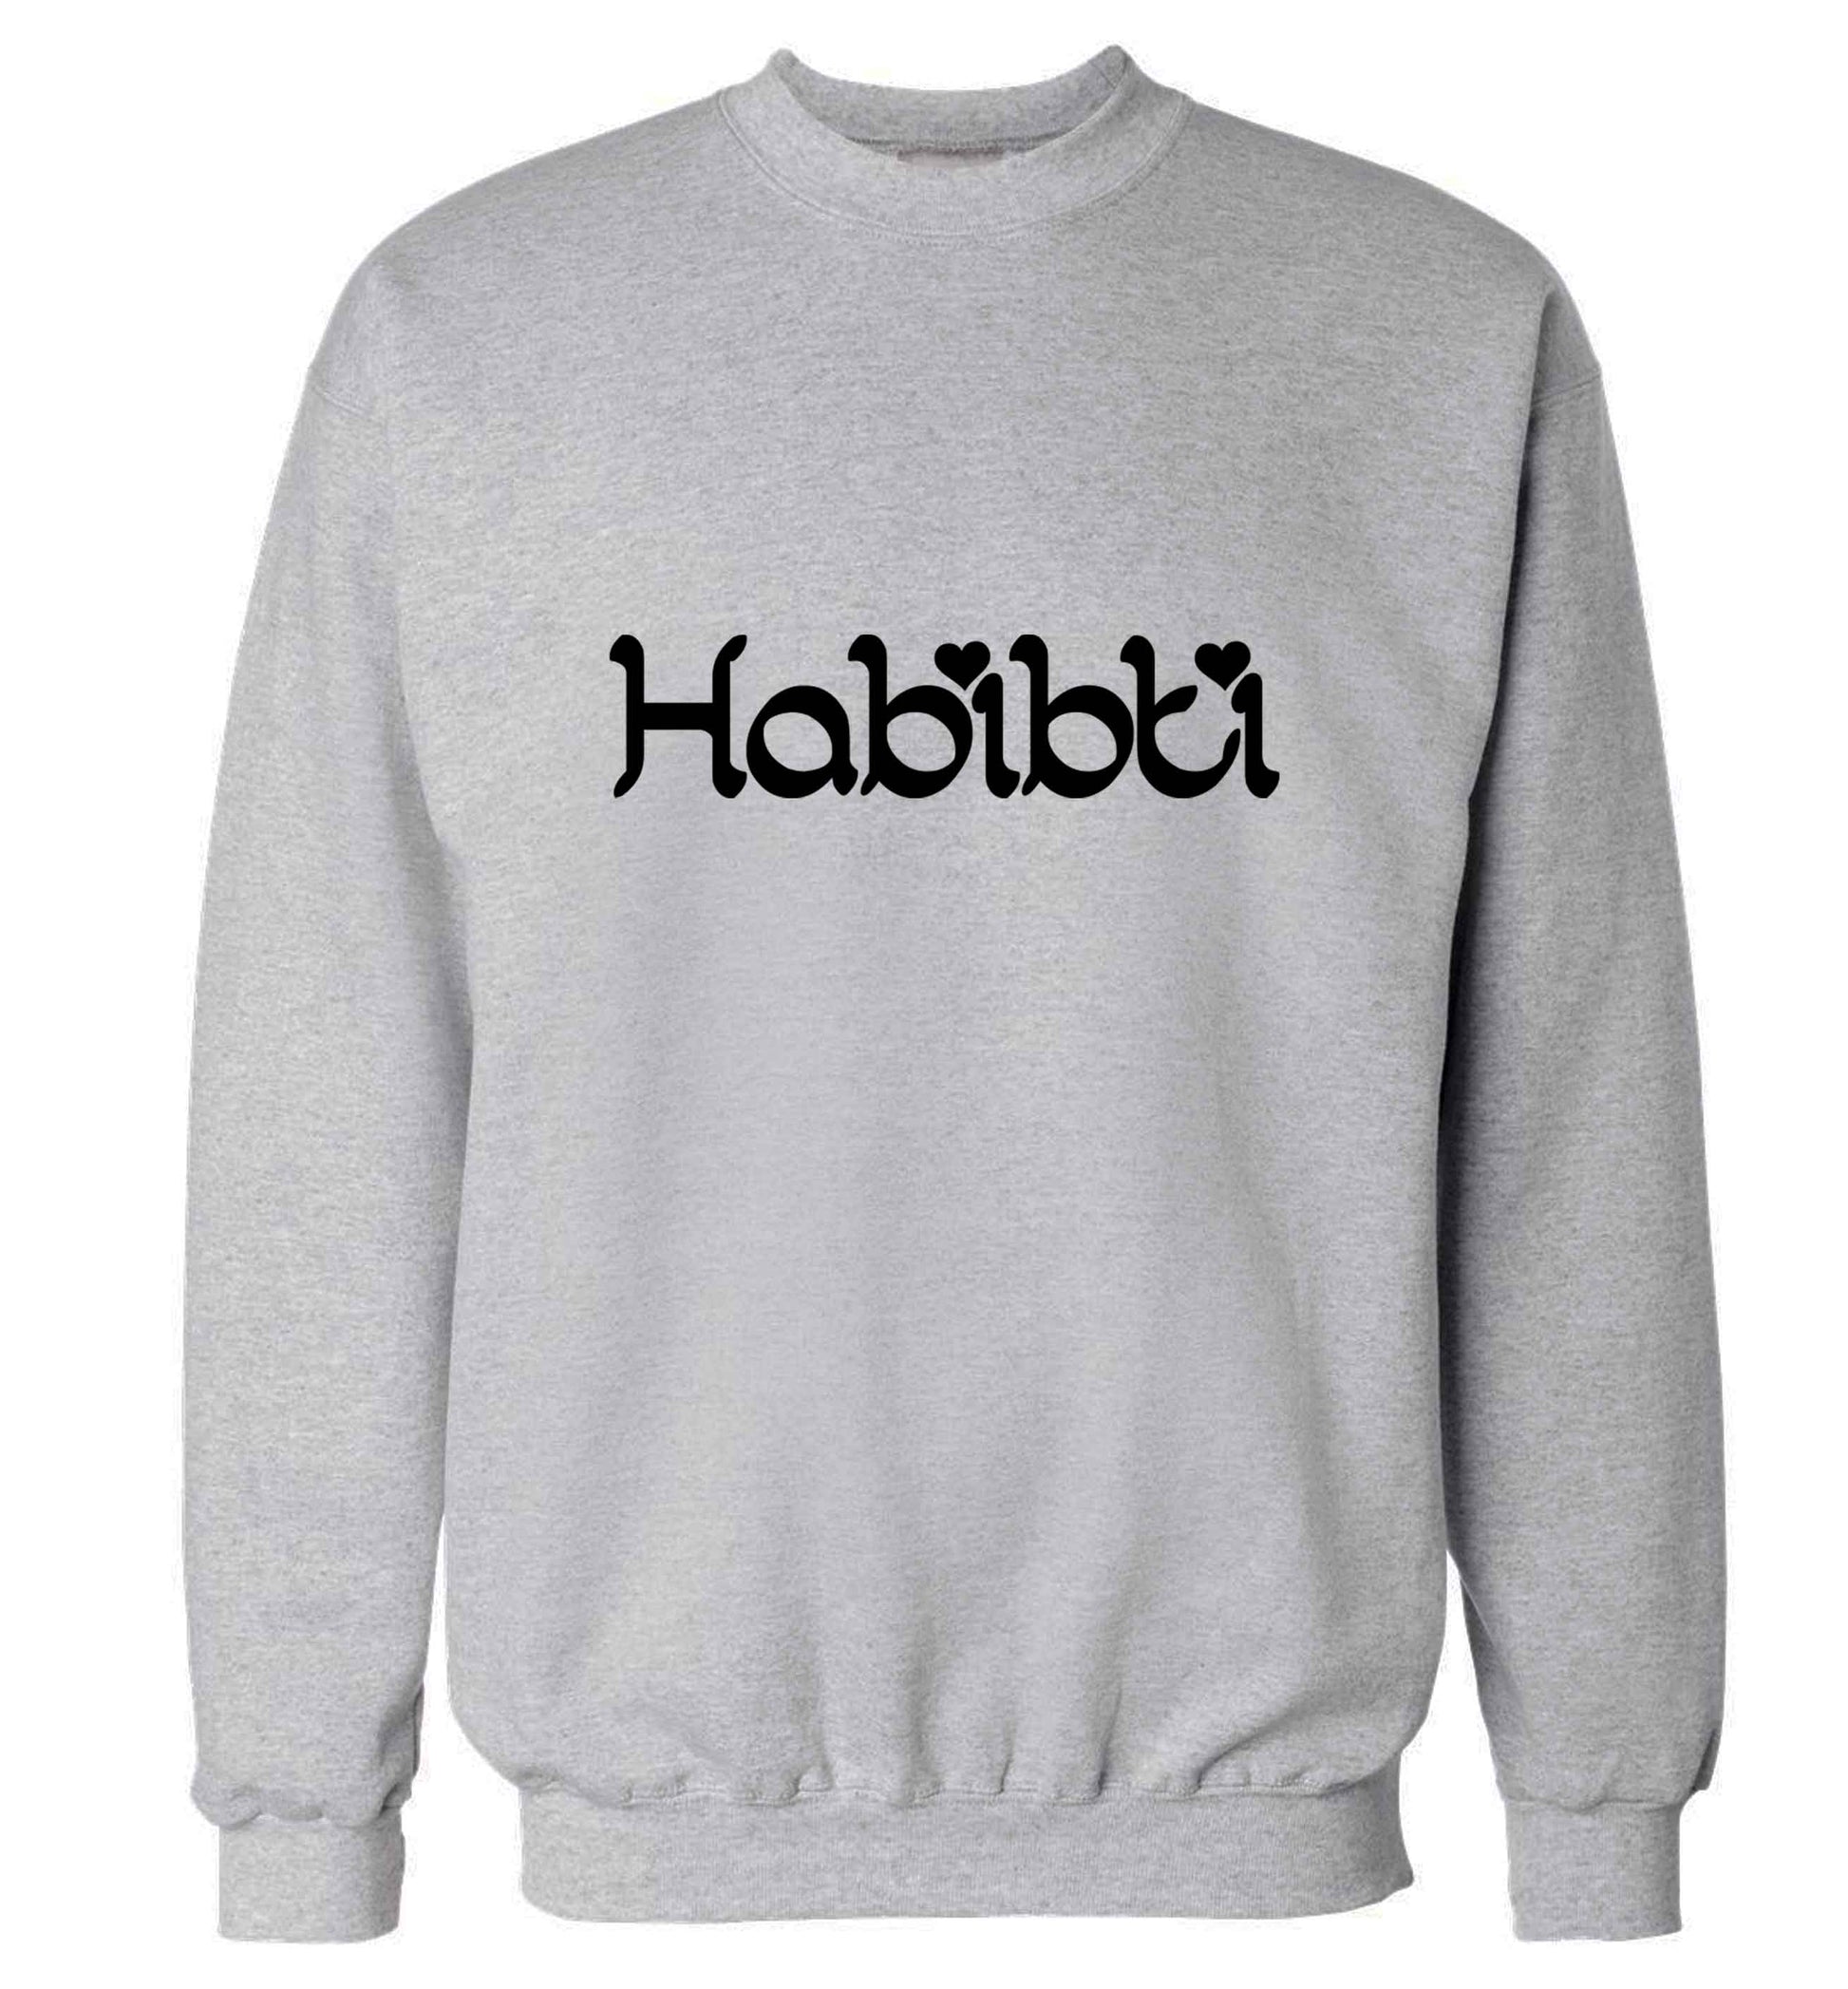 Habibiti adult's unisex grey sweater 2XL